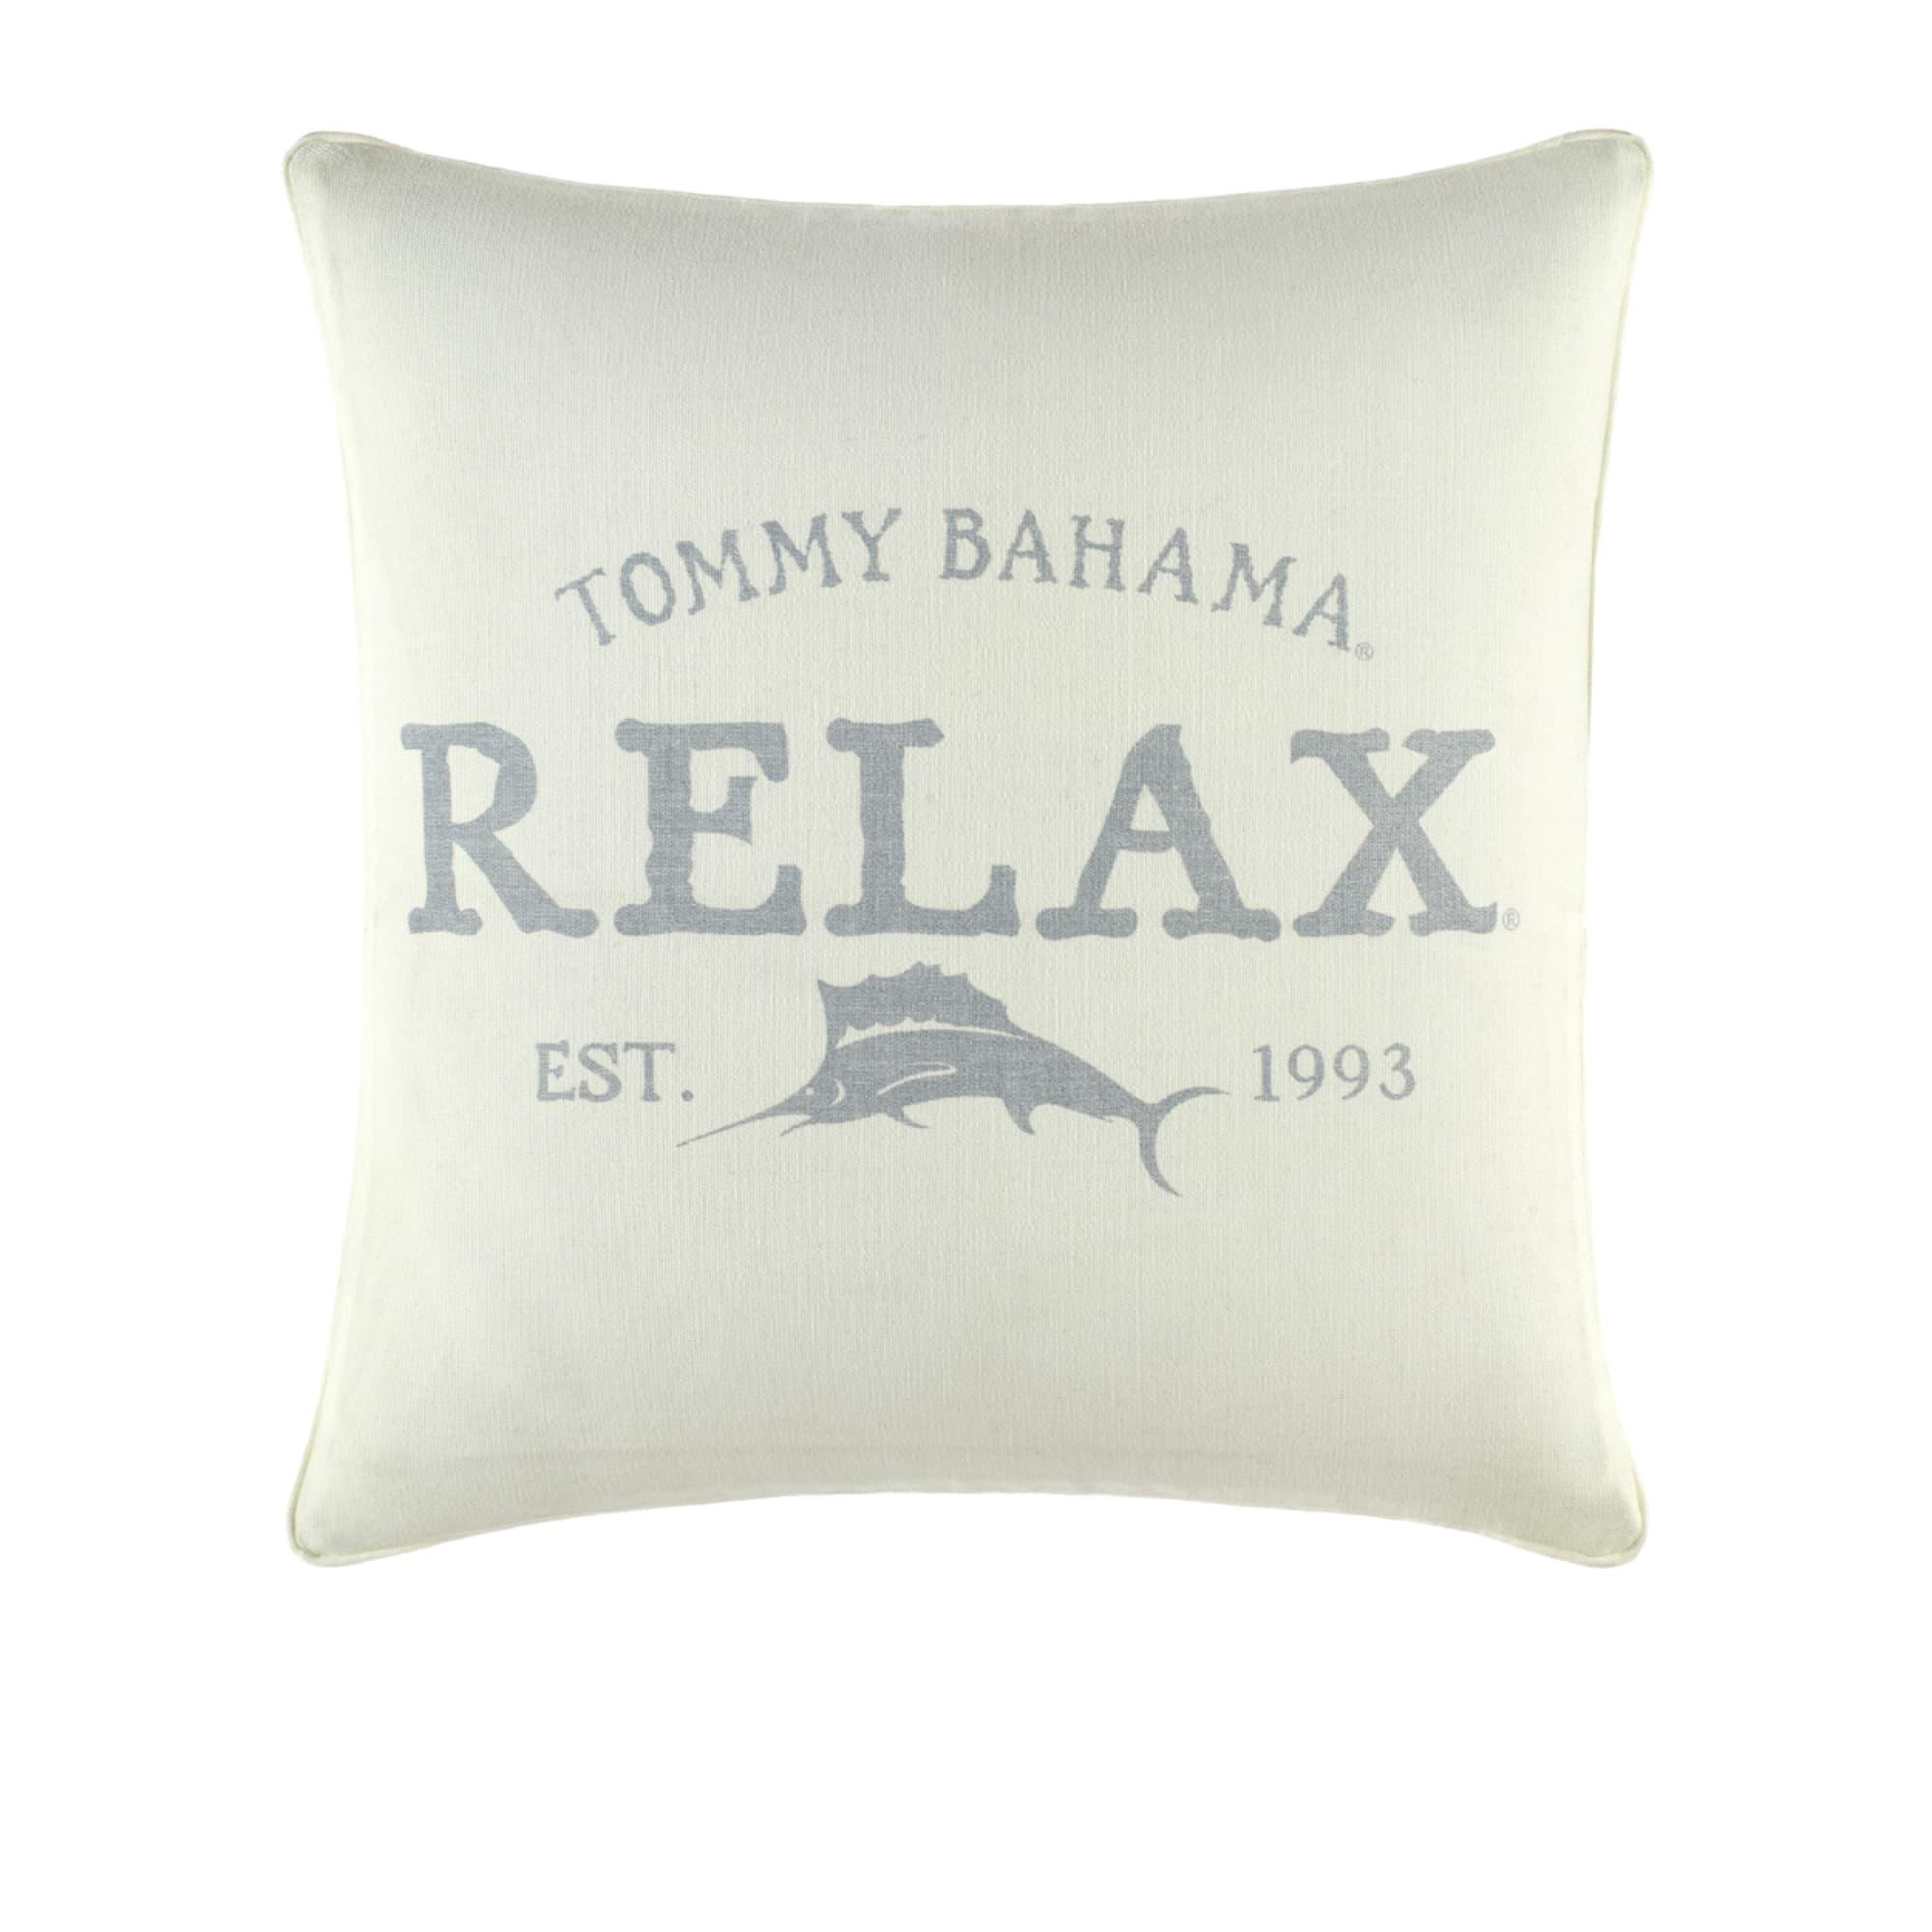 Tommy Bahama Relax Cushion 45X45CM Image 1